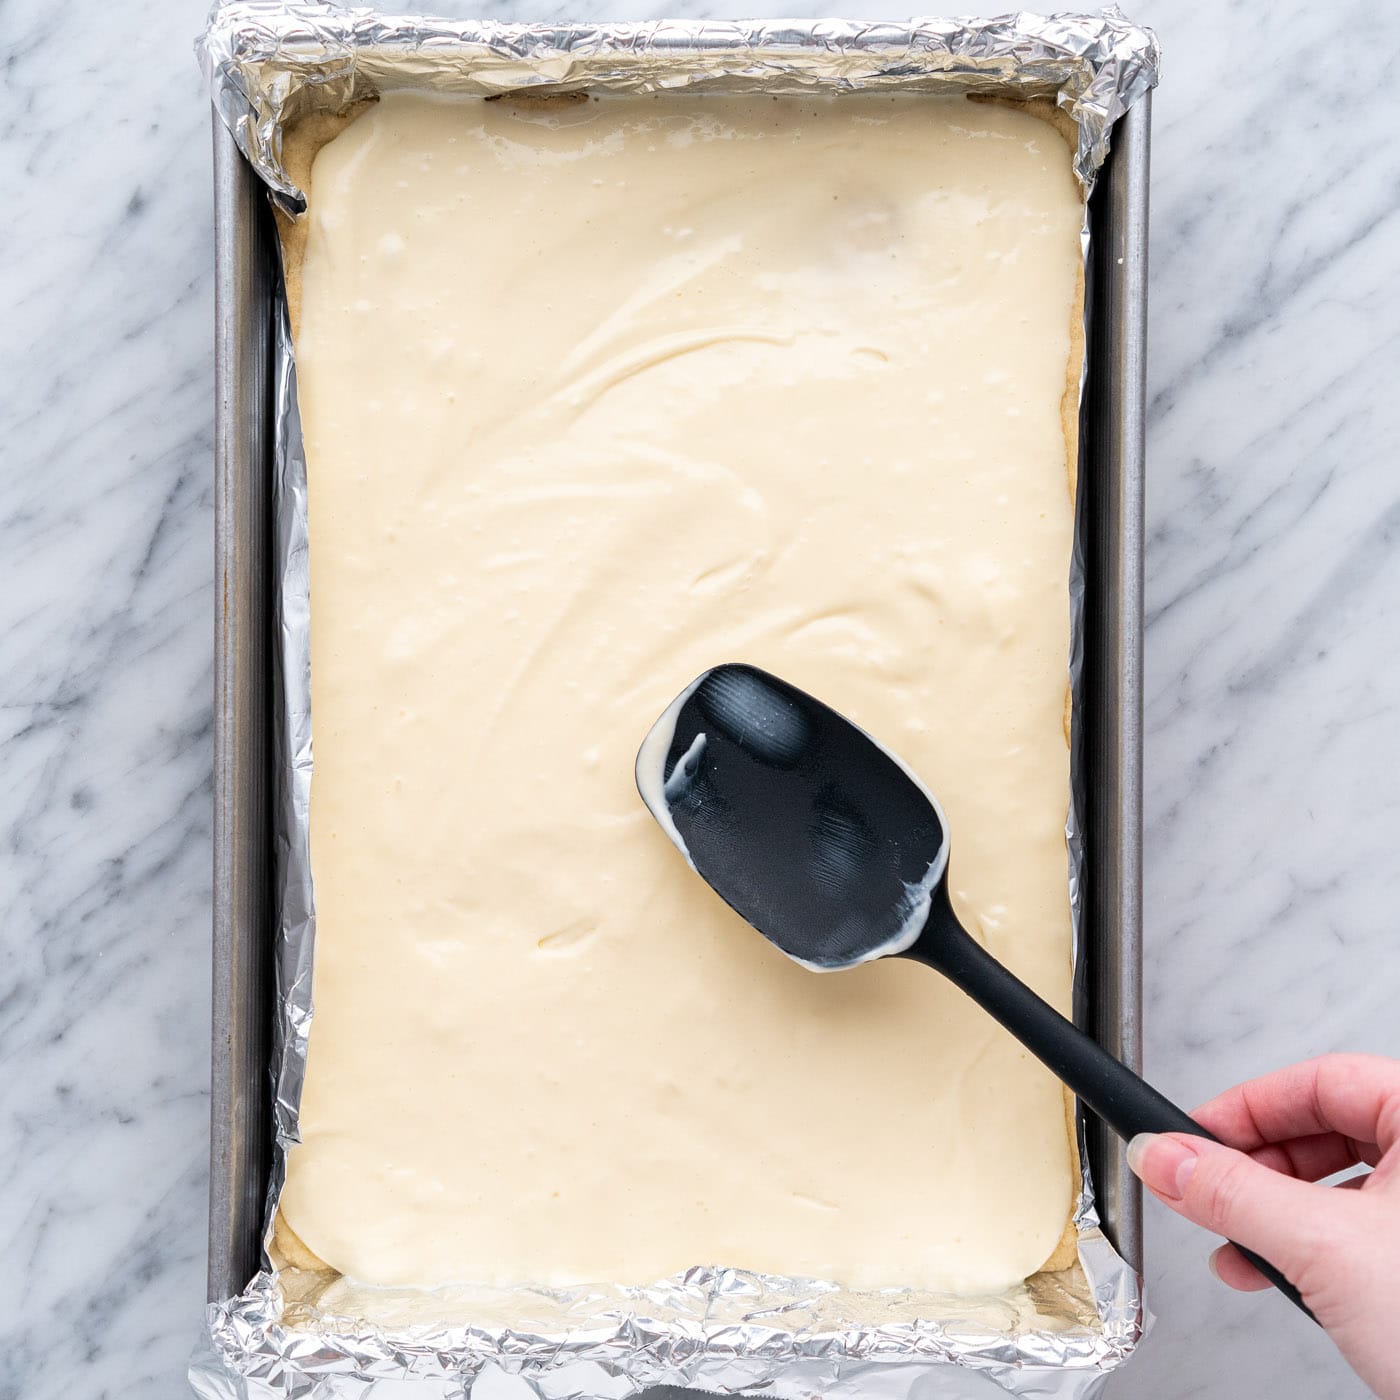 spreading cheesecake mixture over shortbread crust